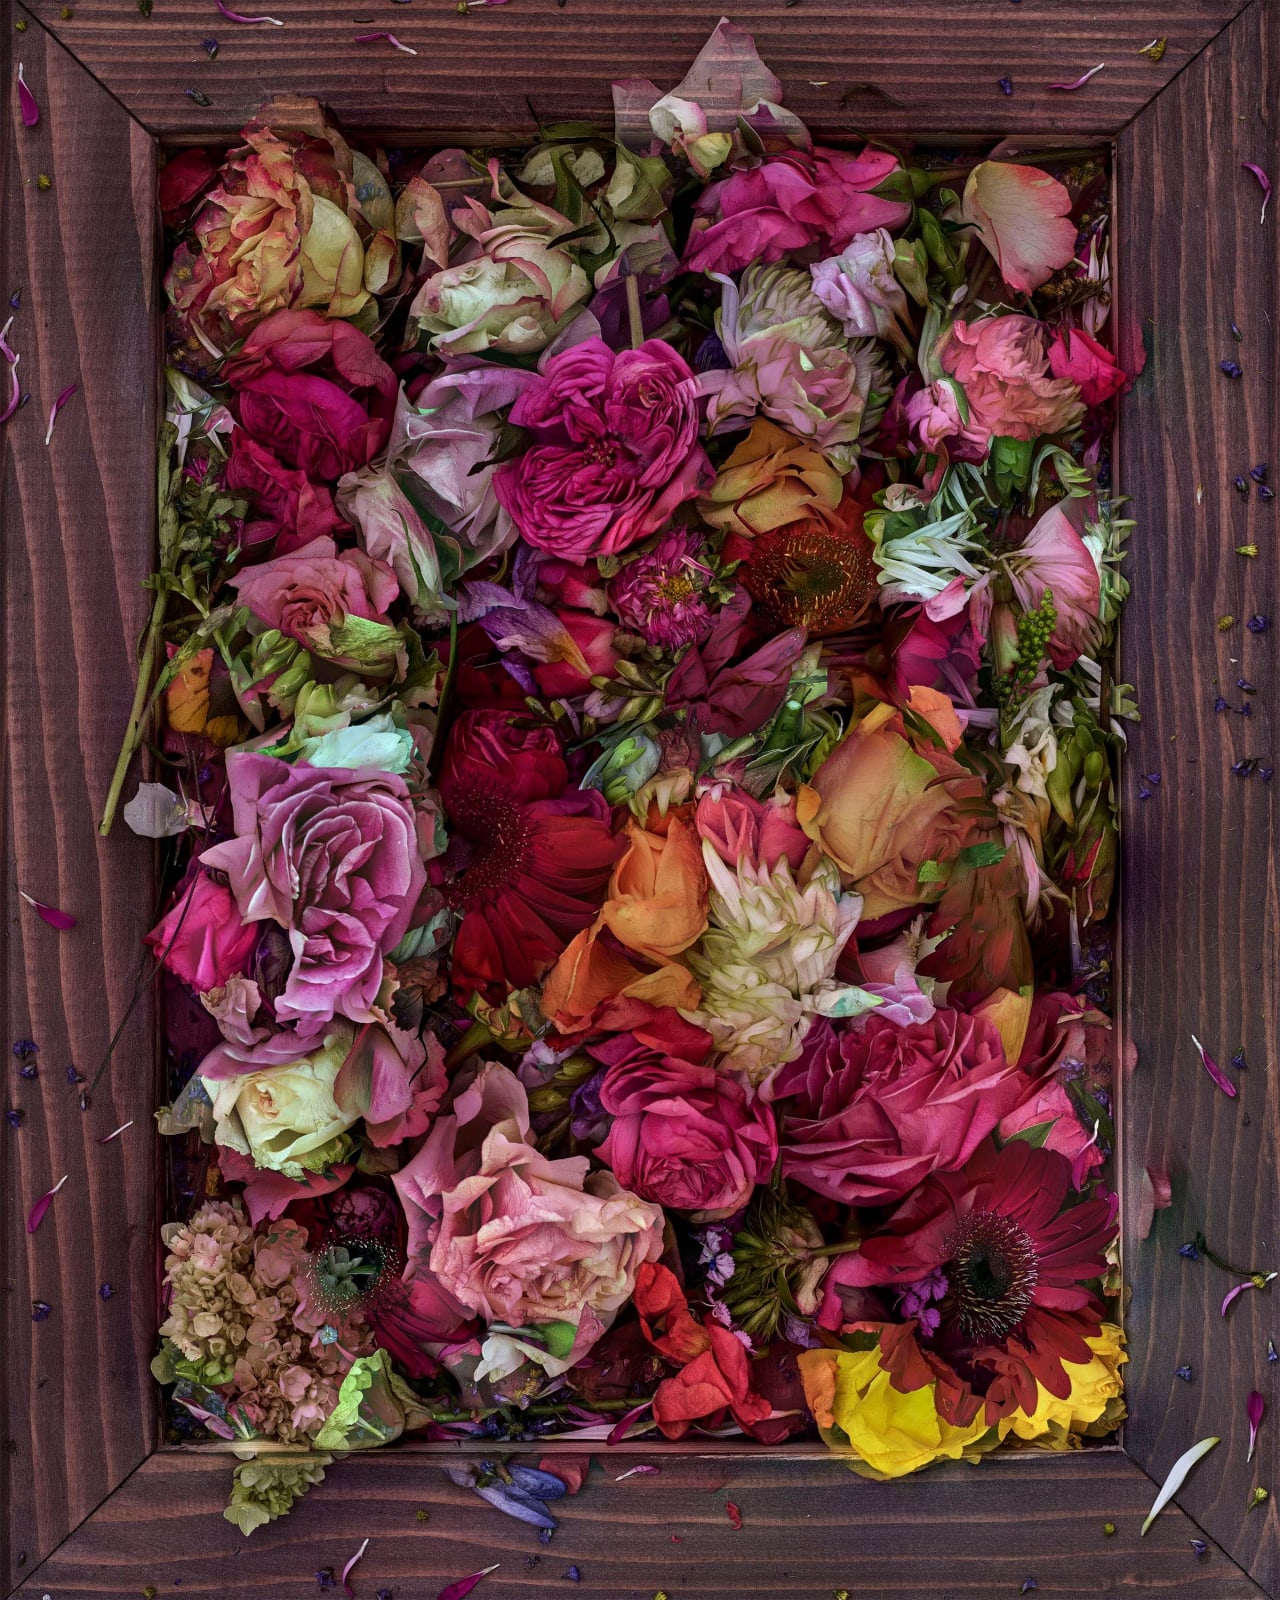 Abelardo Morell Flowers for Lisa #8 pink flowers set in wood frame